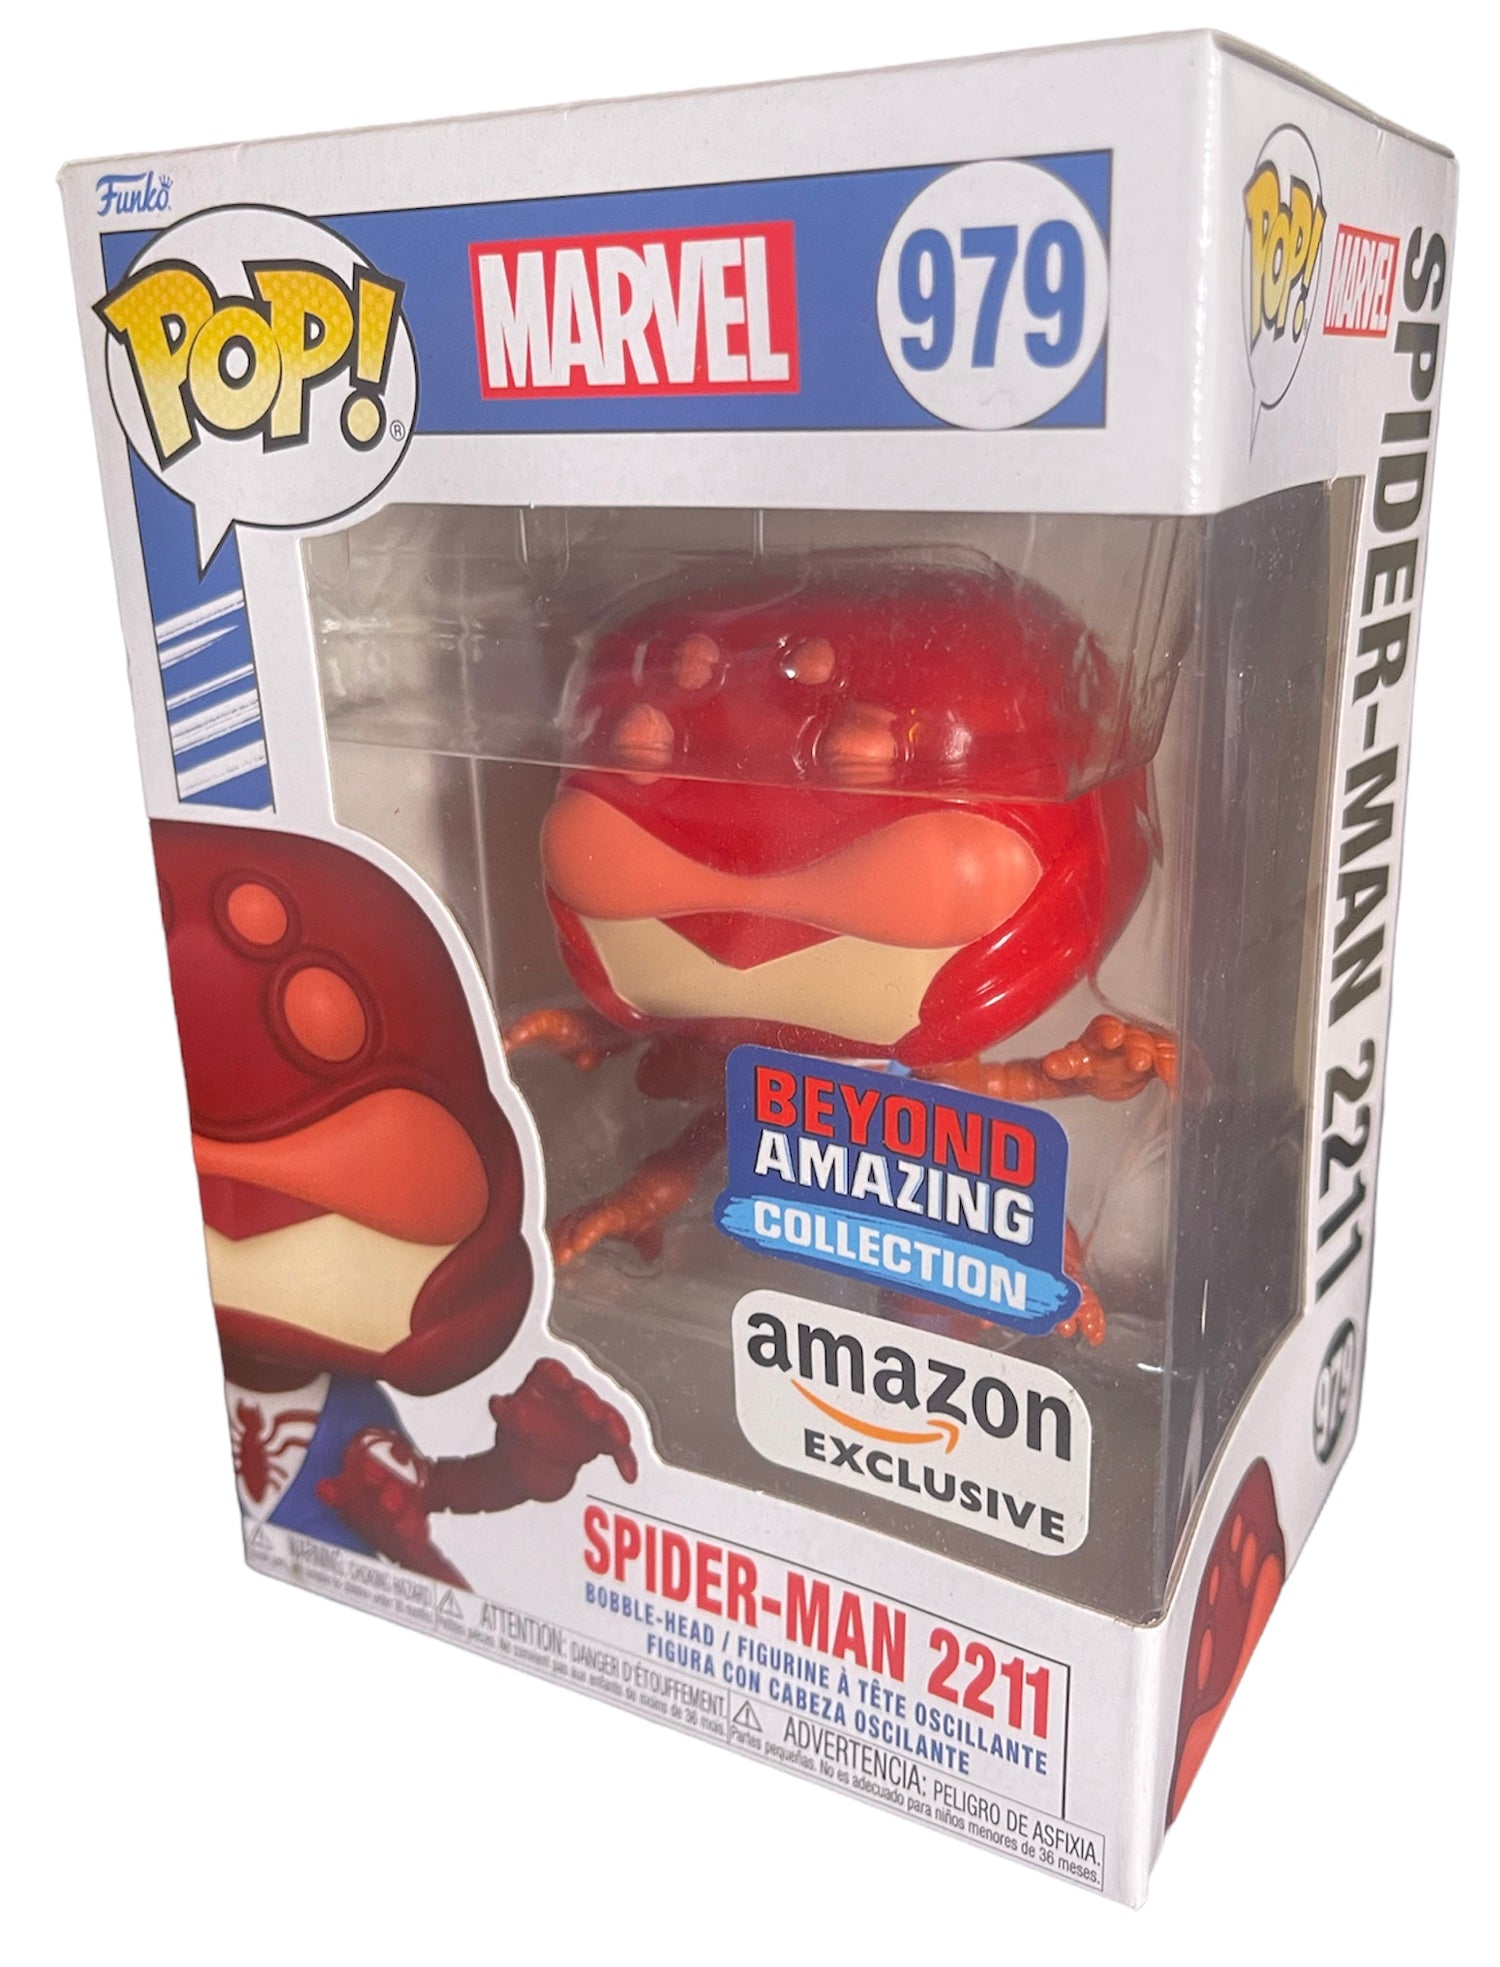 Spider Man 2211 Amazon Exclusive Funko Pop #979